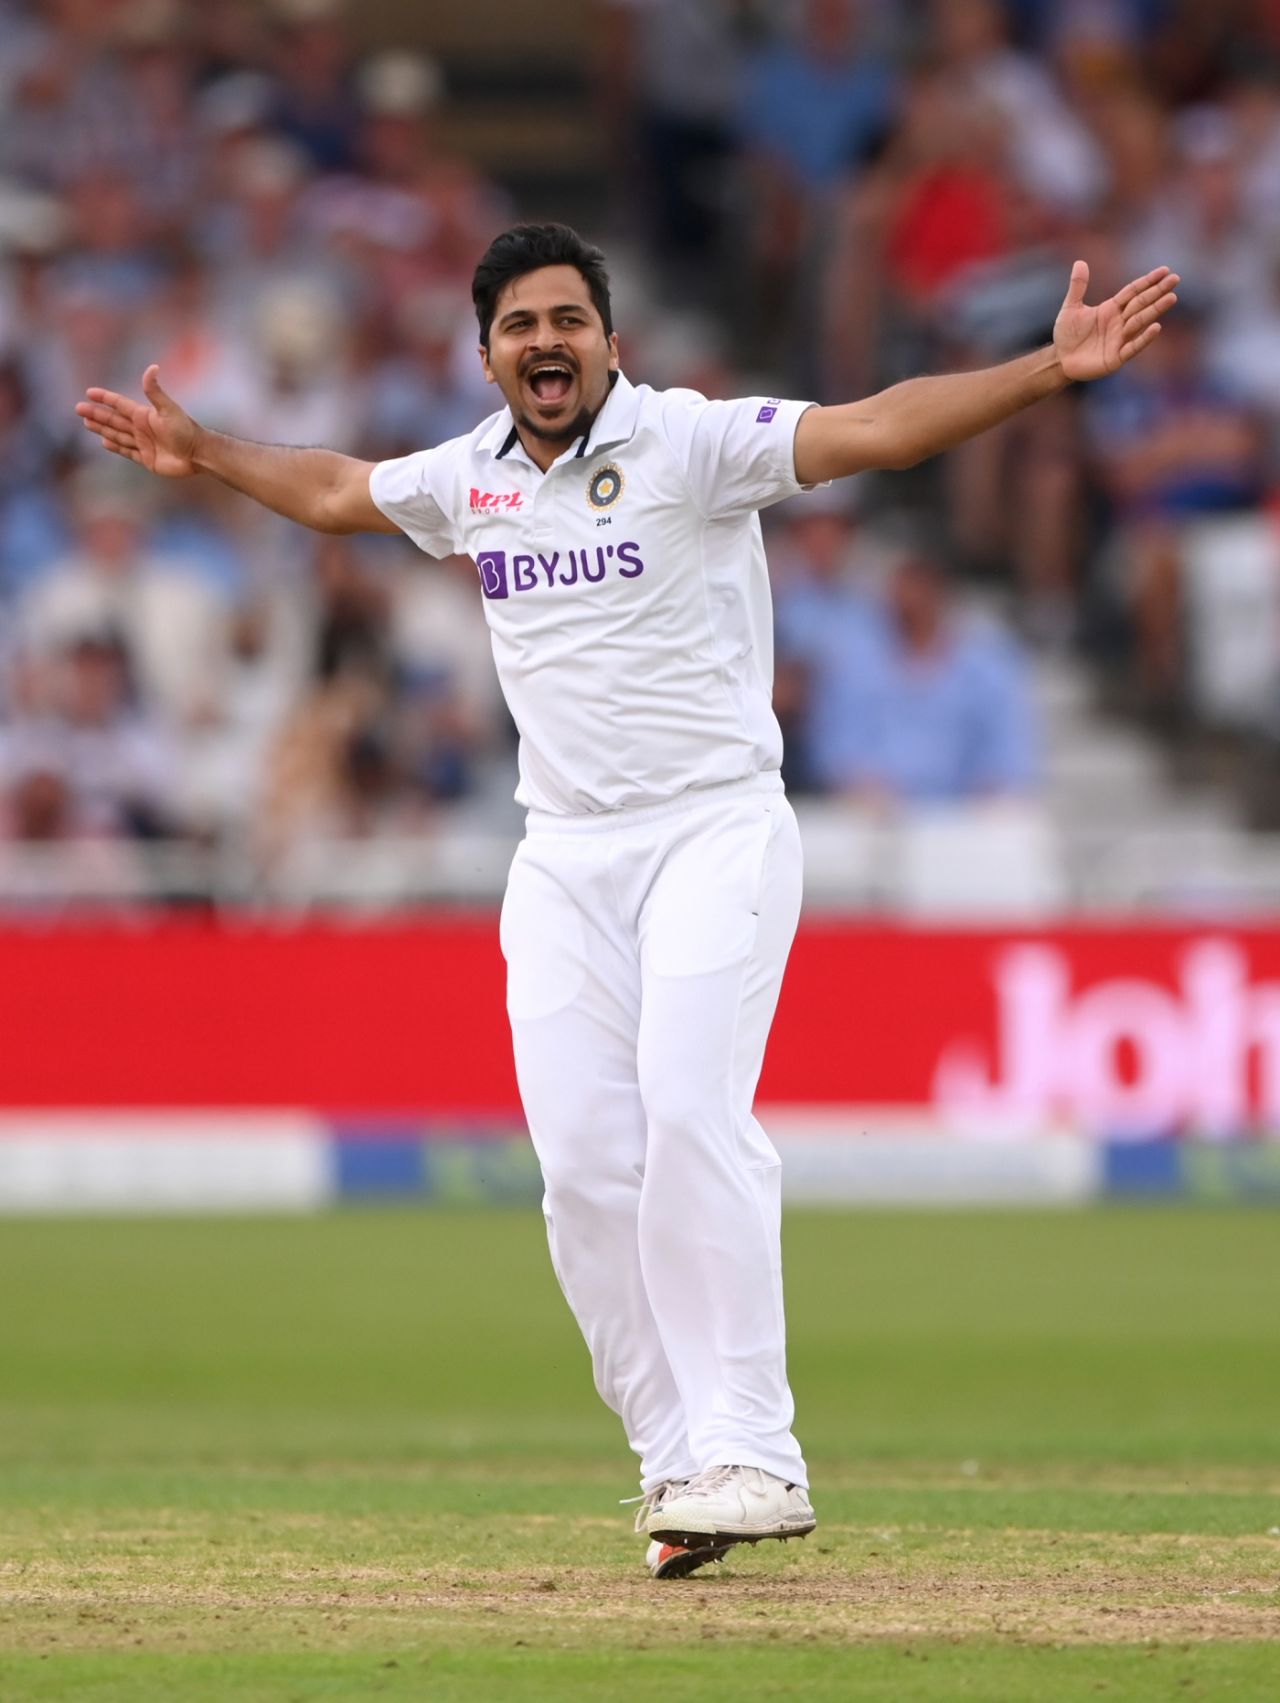 Shardul Thakur is pleased after dismissing Joe Root, England vs India, 1st Test, Nottingham, 1st day, August 4, 2021